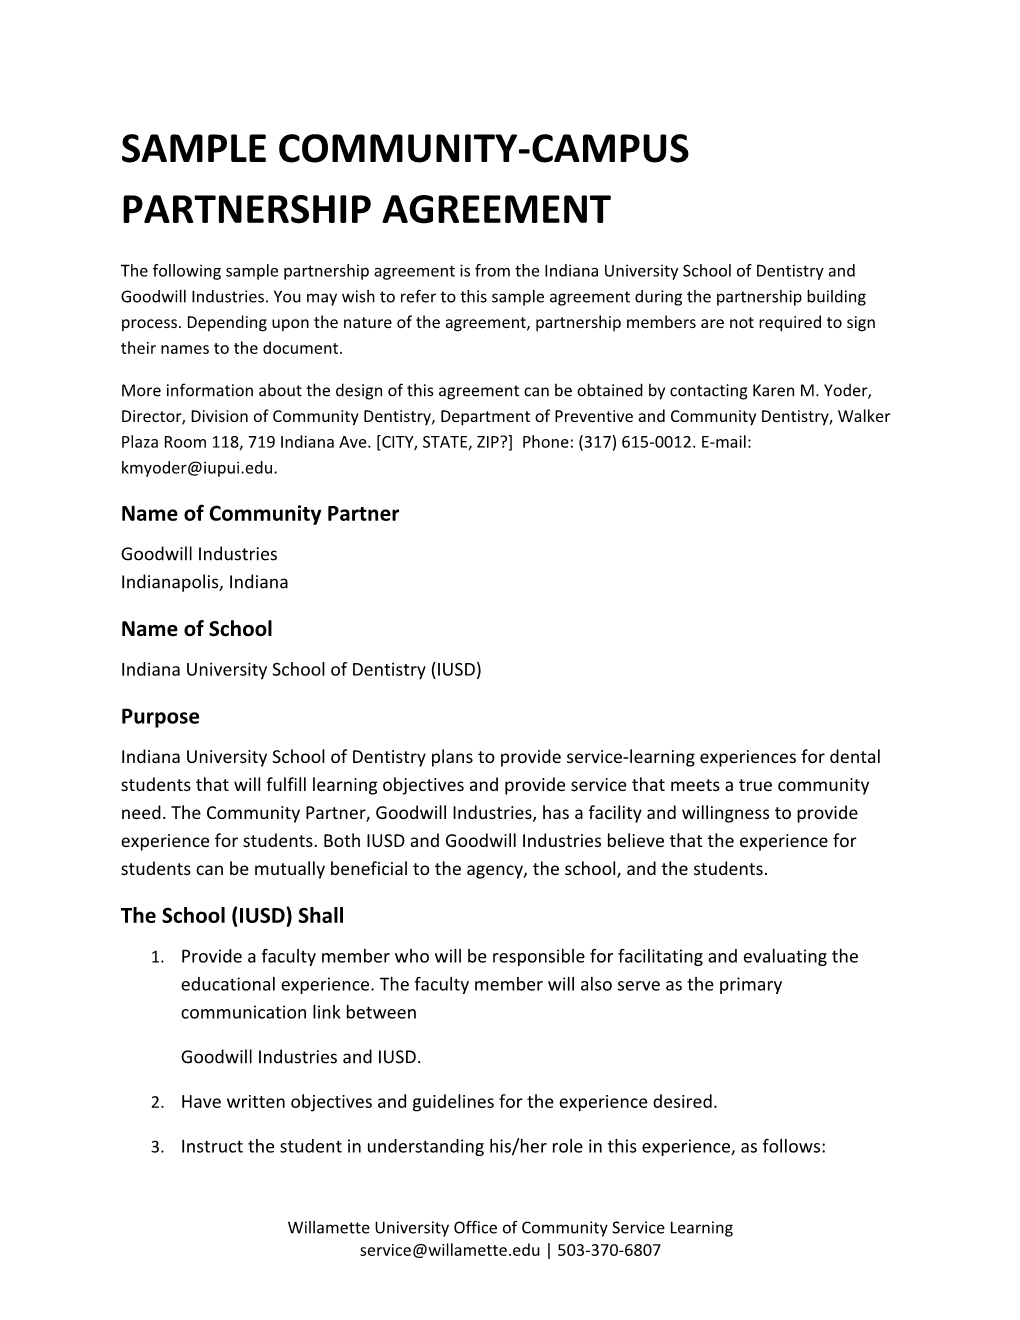 Sample Community-Campus Partnership Agreement